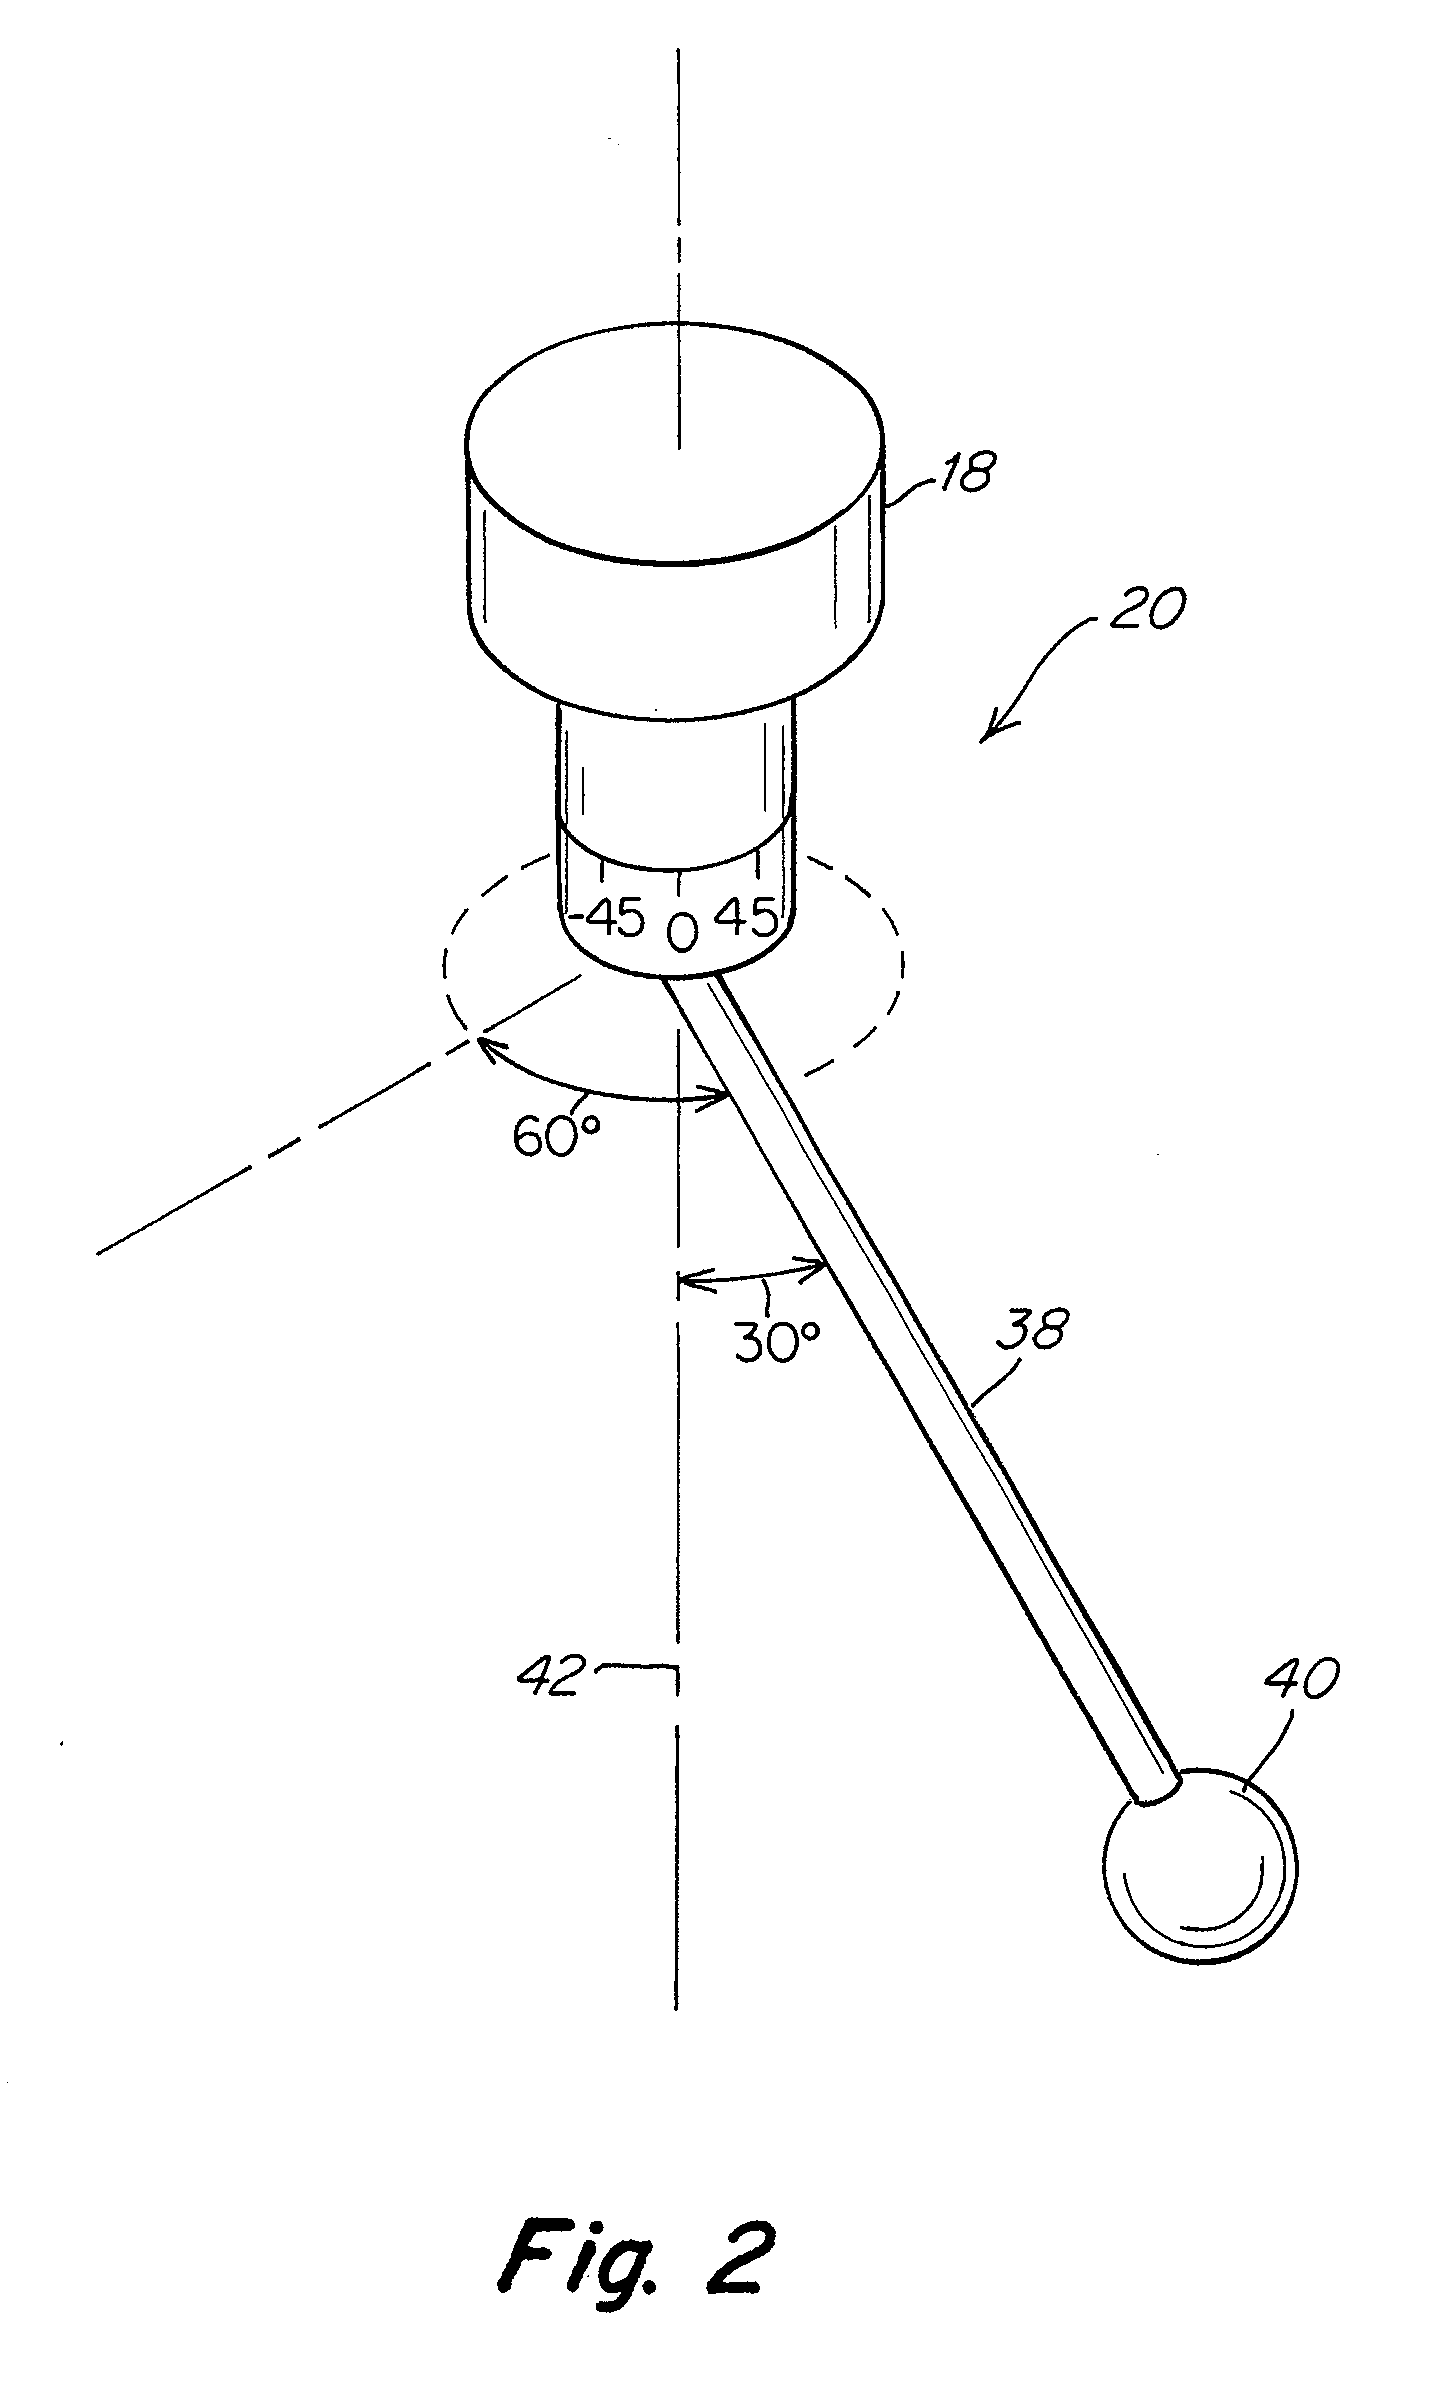 Method and apparatus for probe tip diameter calibration